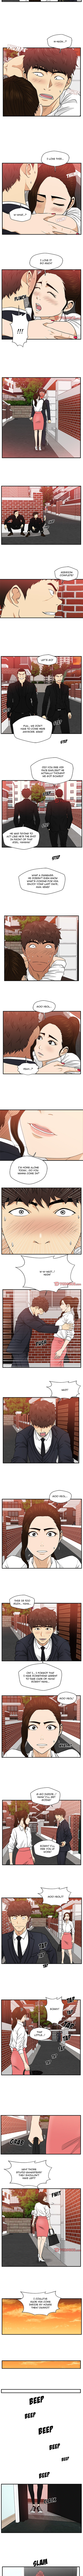 Mr. Kang - Chapter 86 Page 3